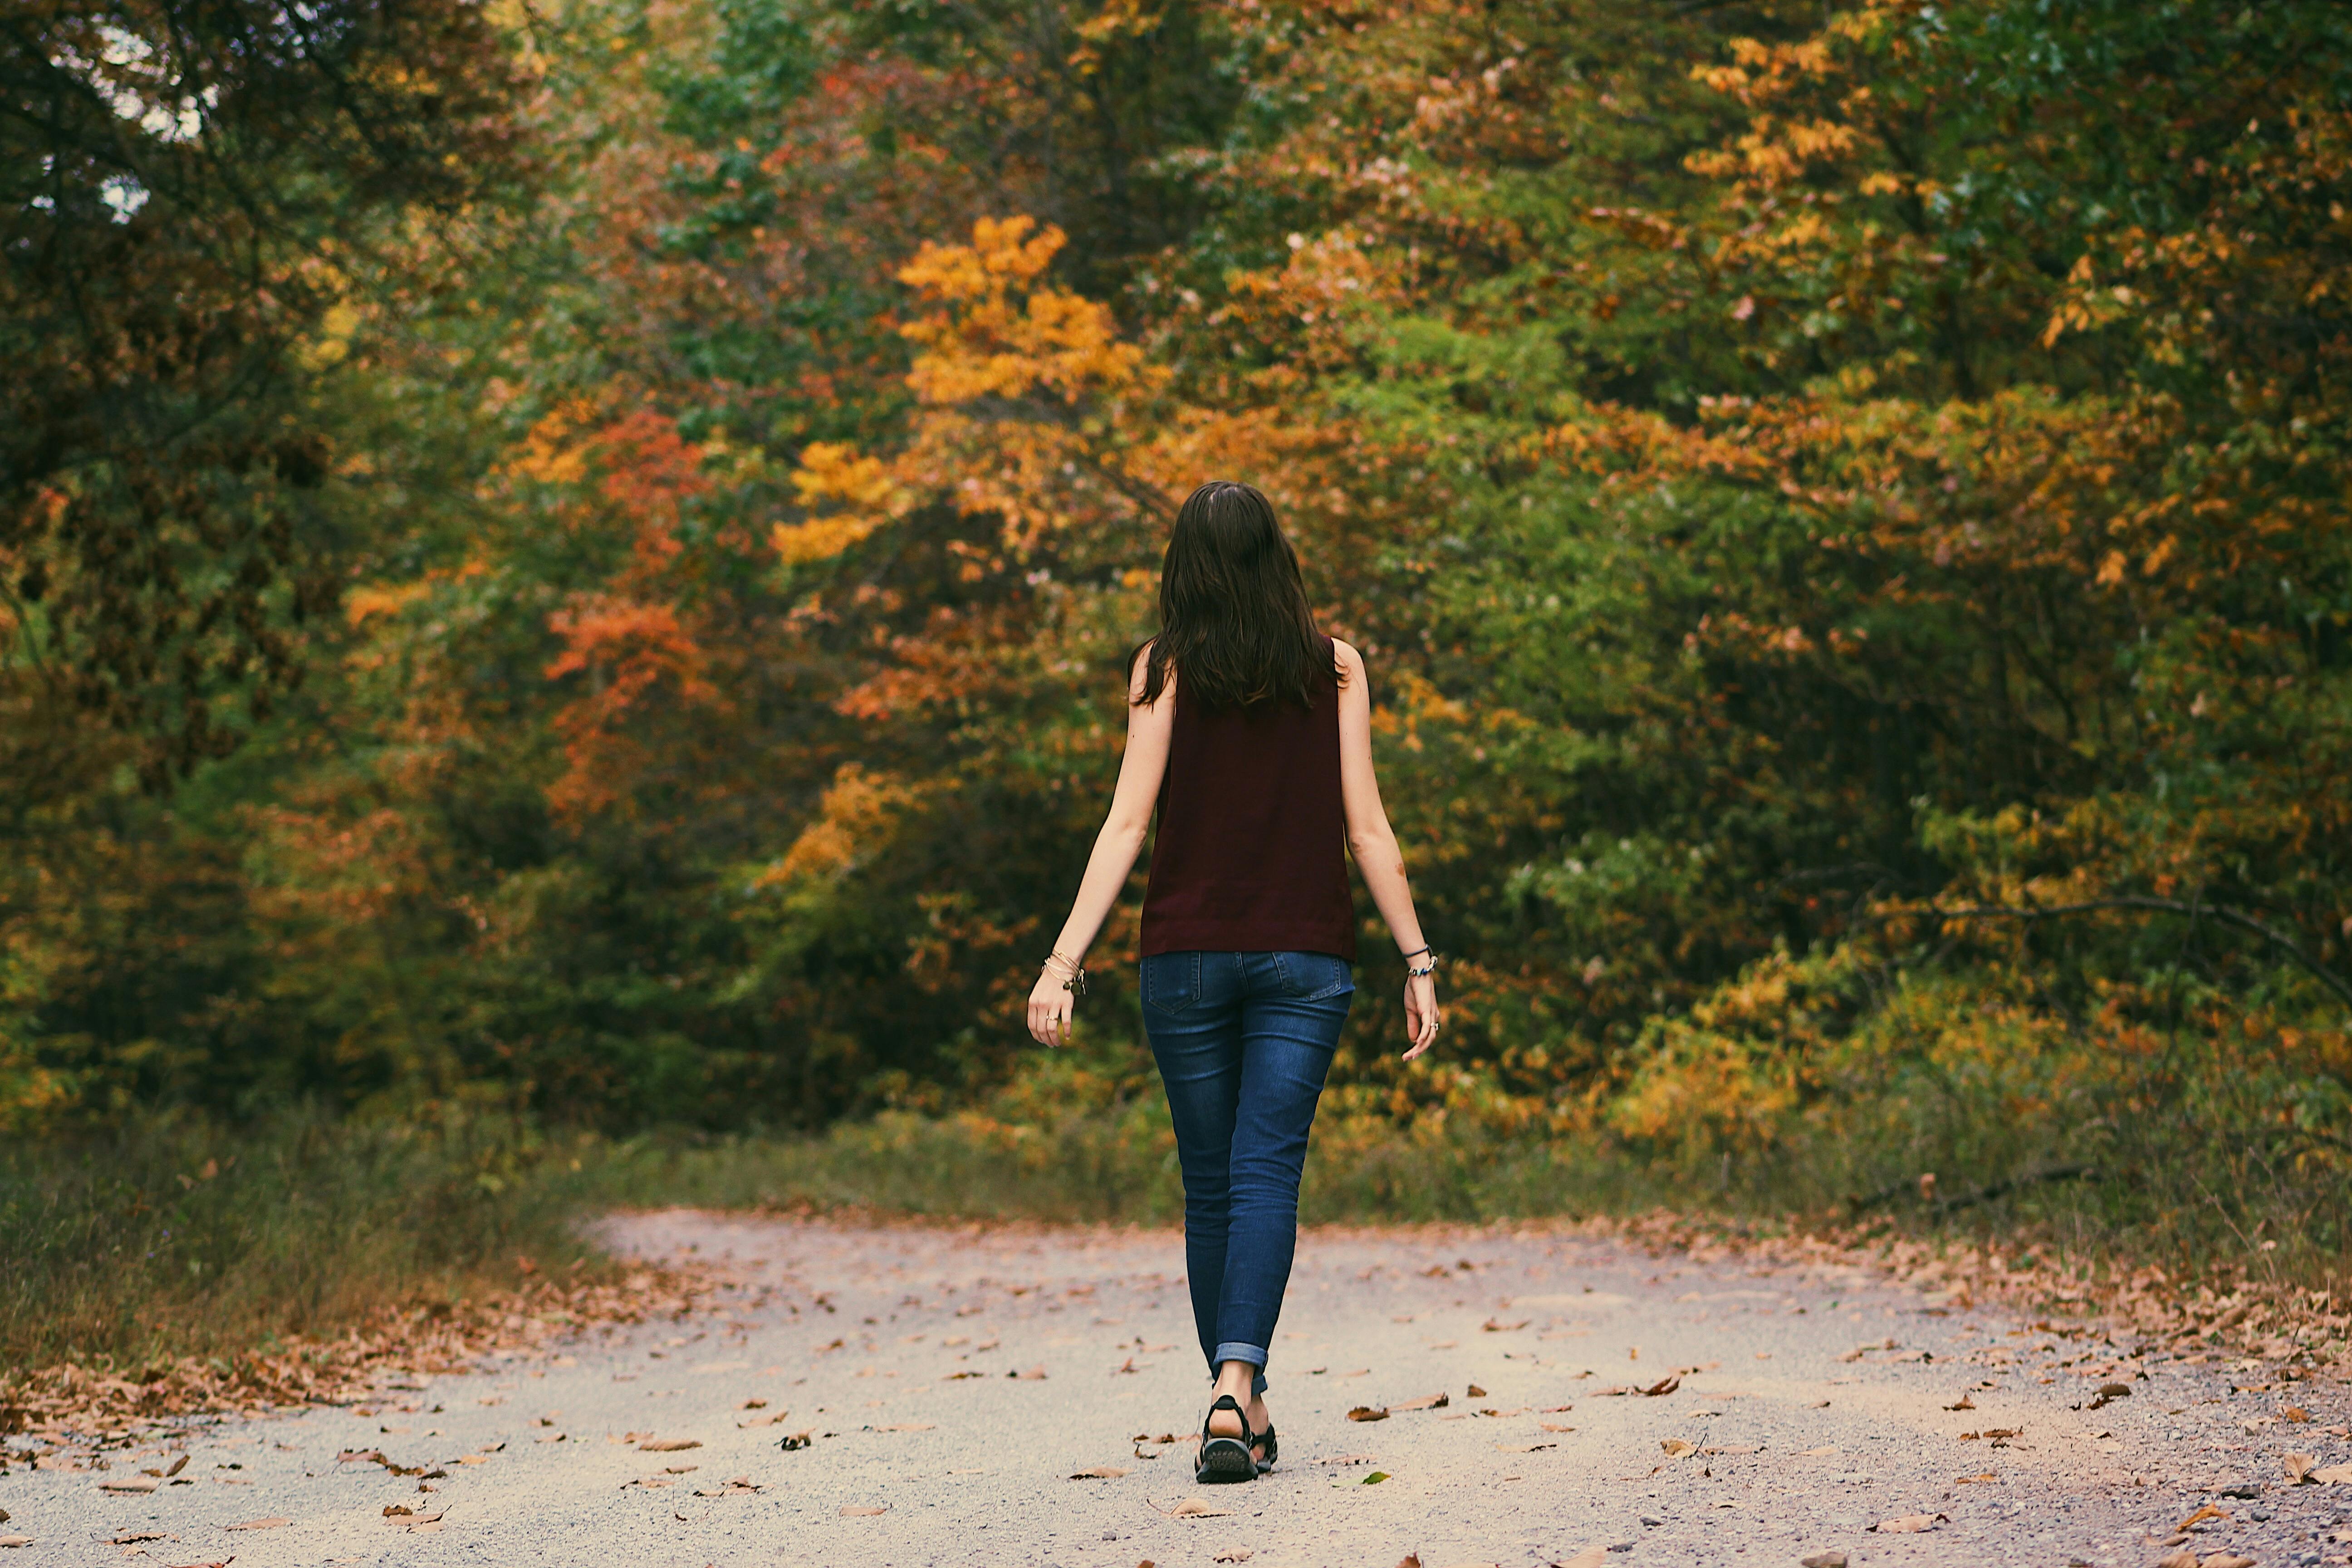 Girl walking away | Source: Pexels